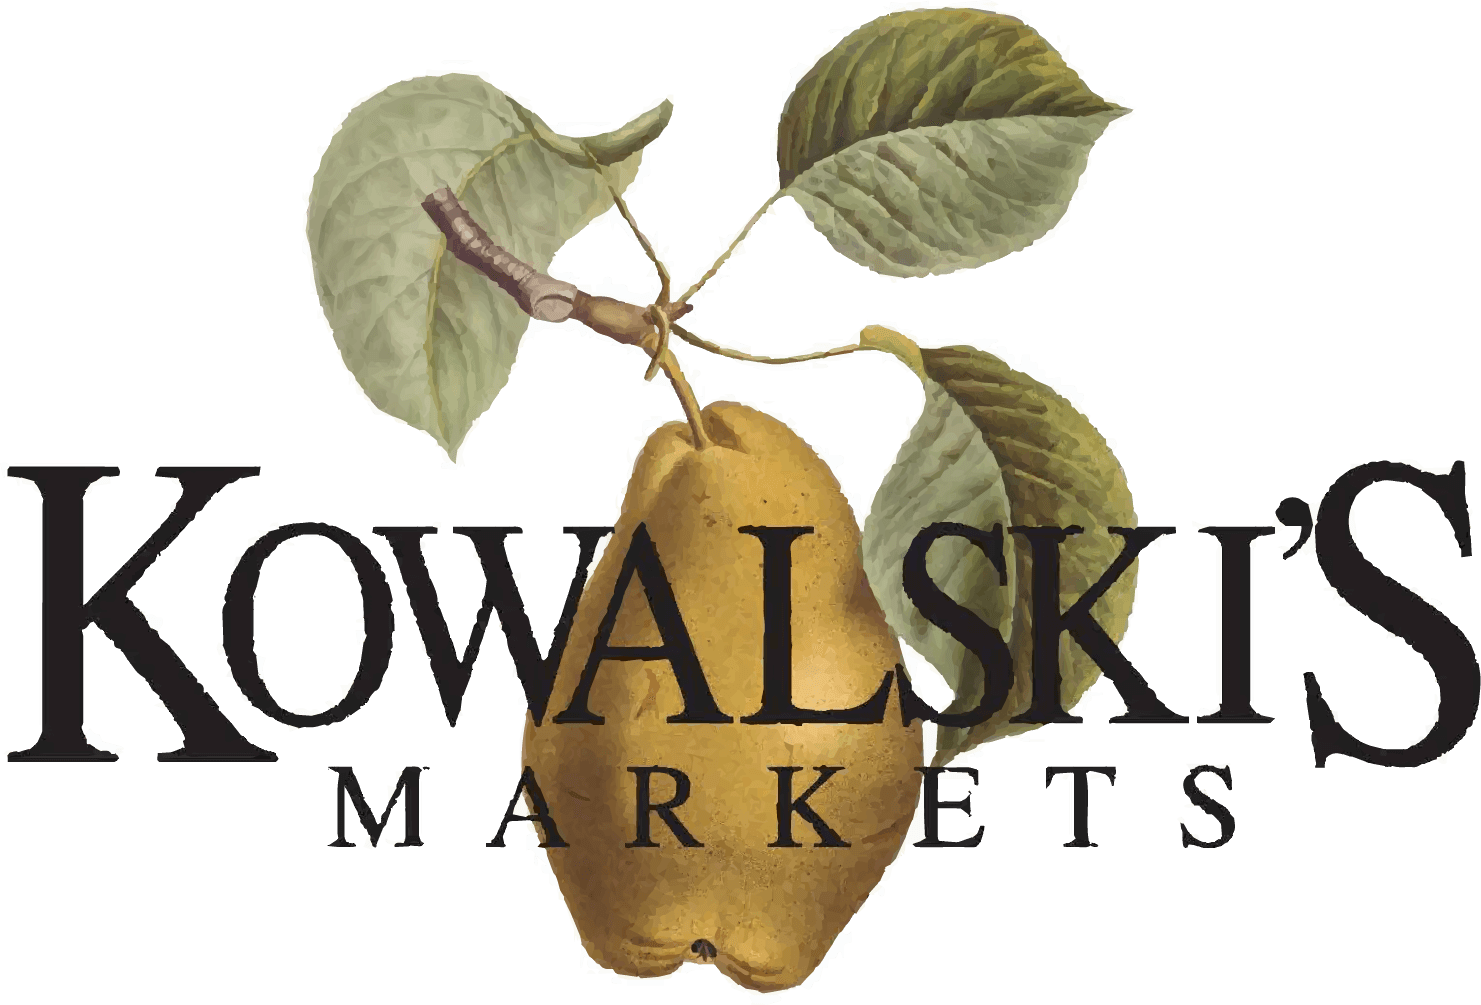 kowalski's logo - transparent background (6)